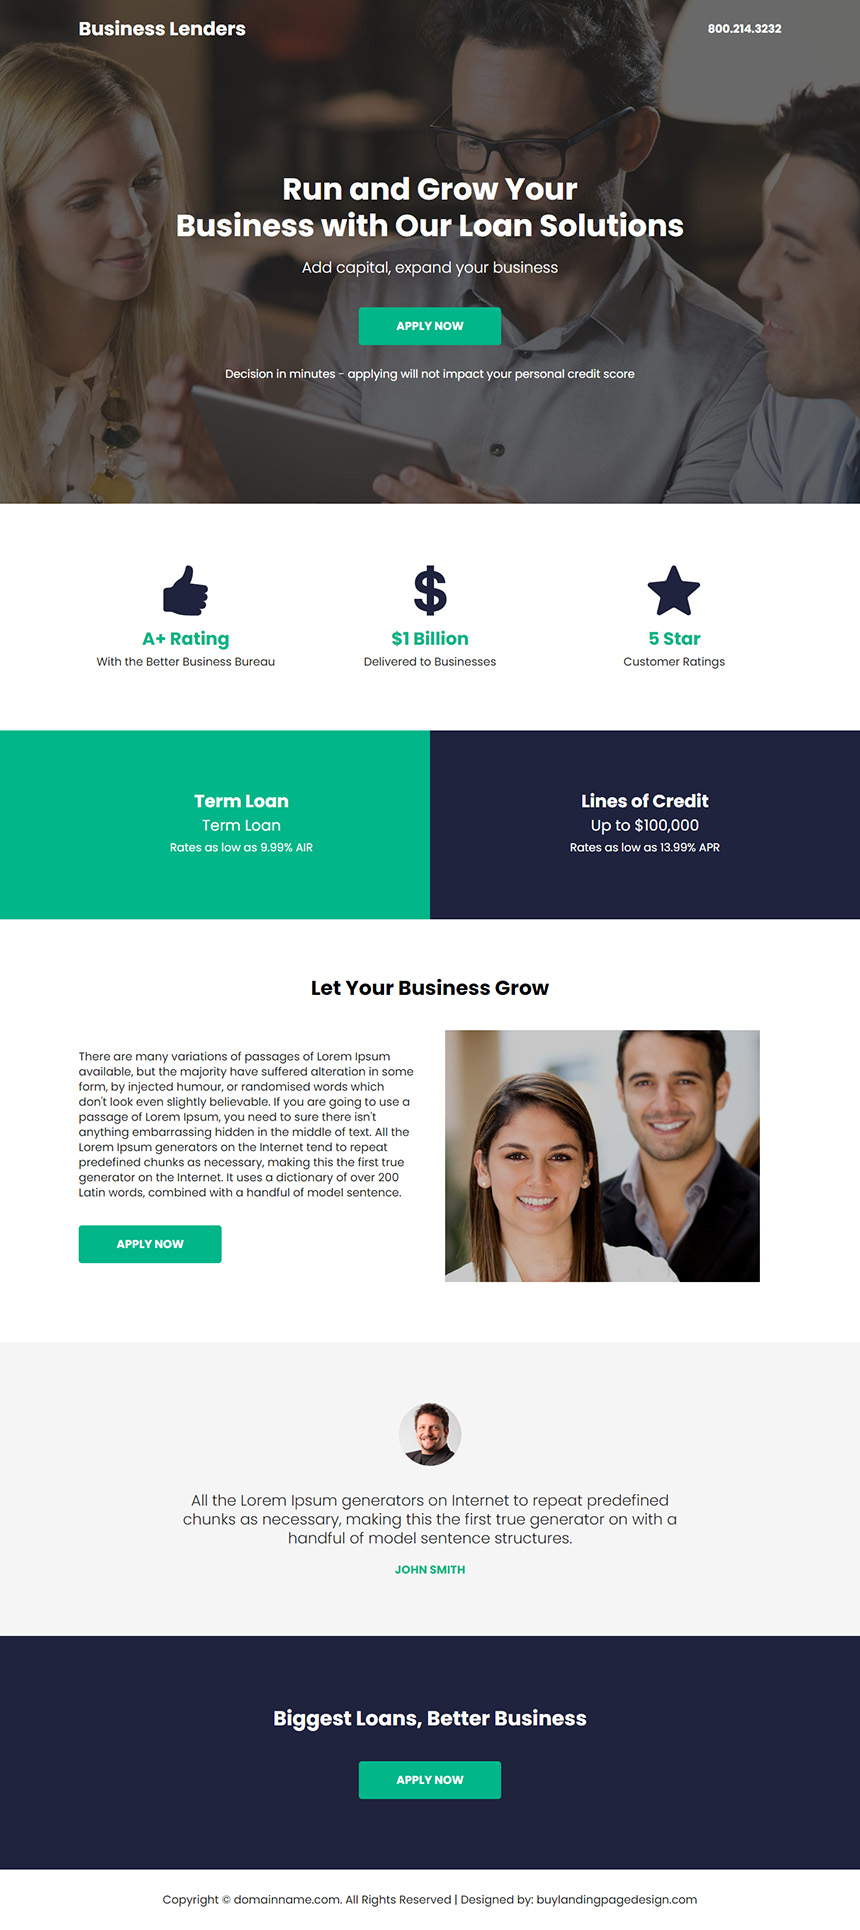 business lenders lead capture responsive landing page design